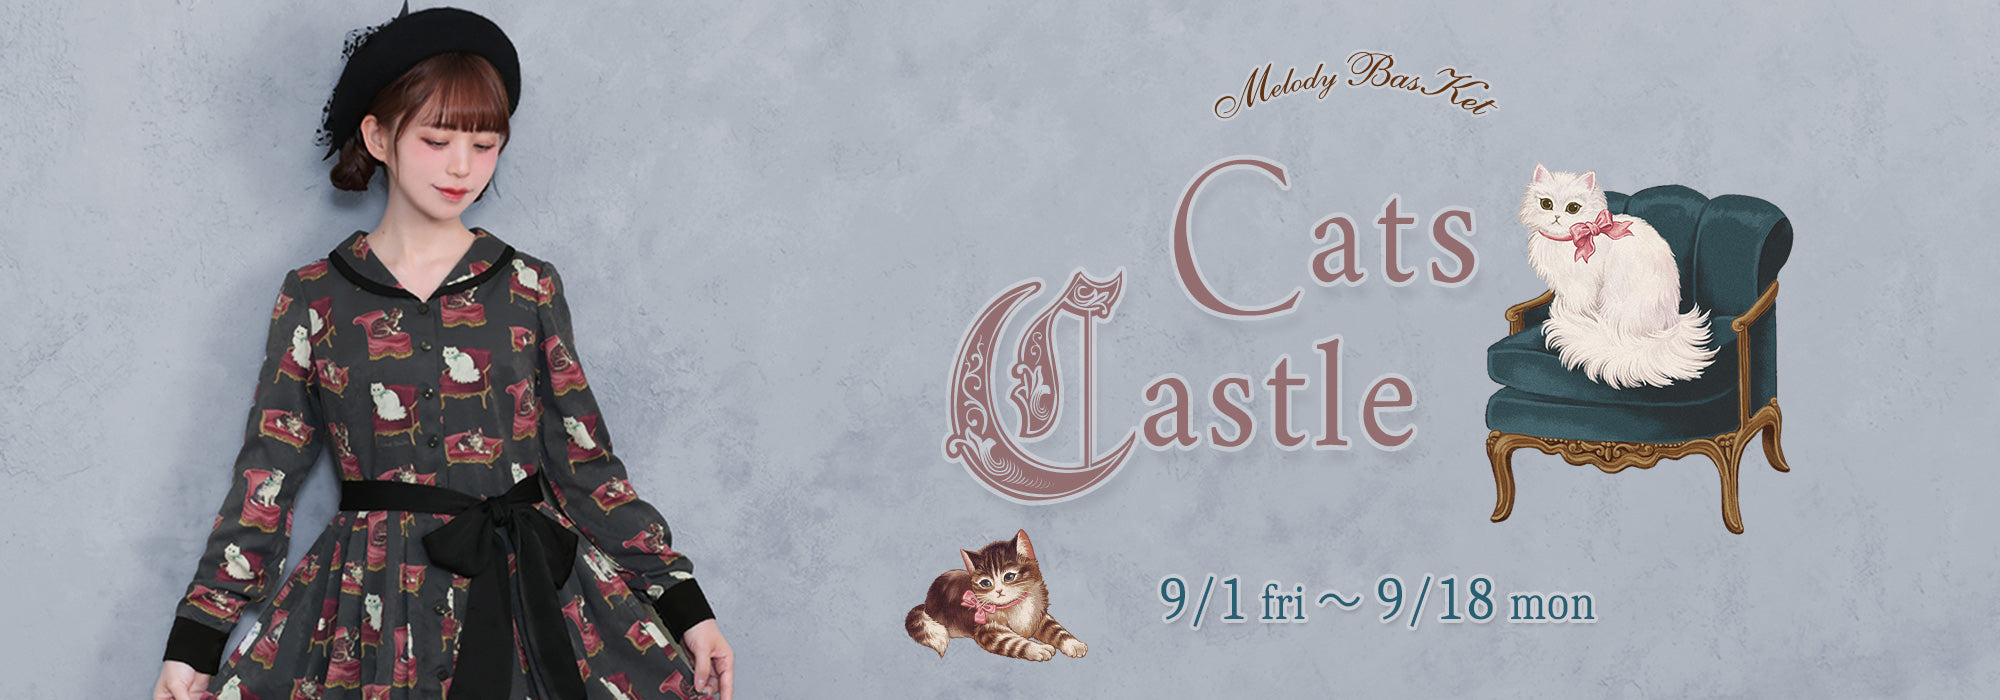 MILK深澤翠さん×Melody BasKet Cats castleフロントボタンOP